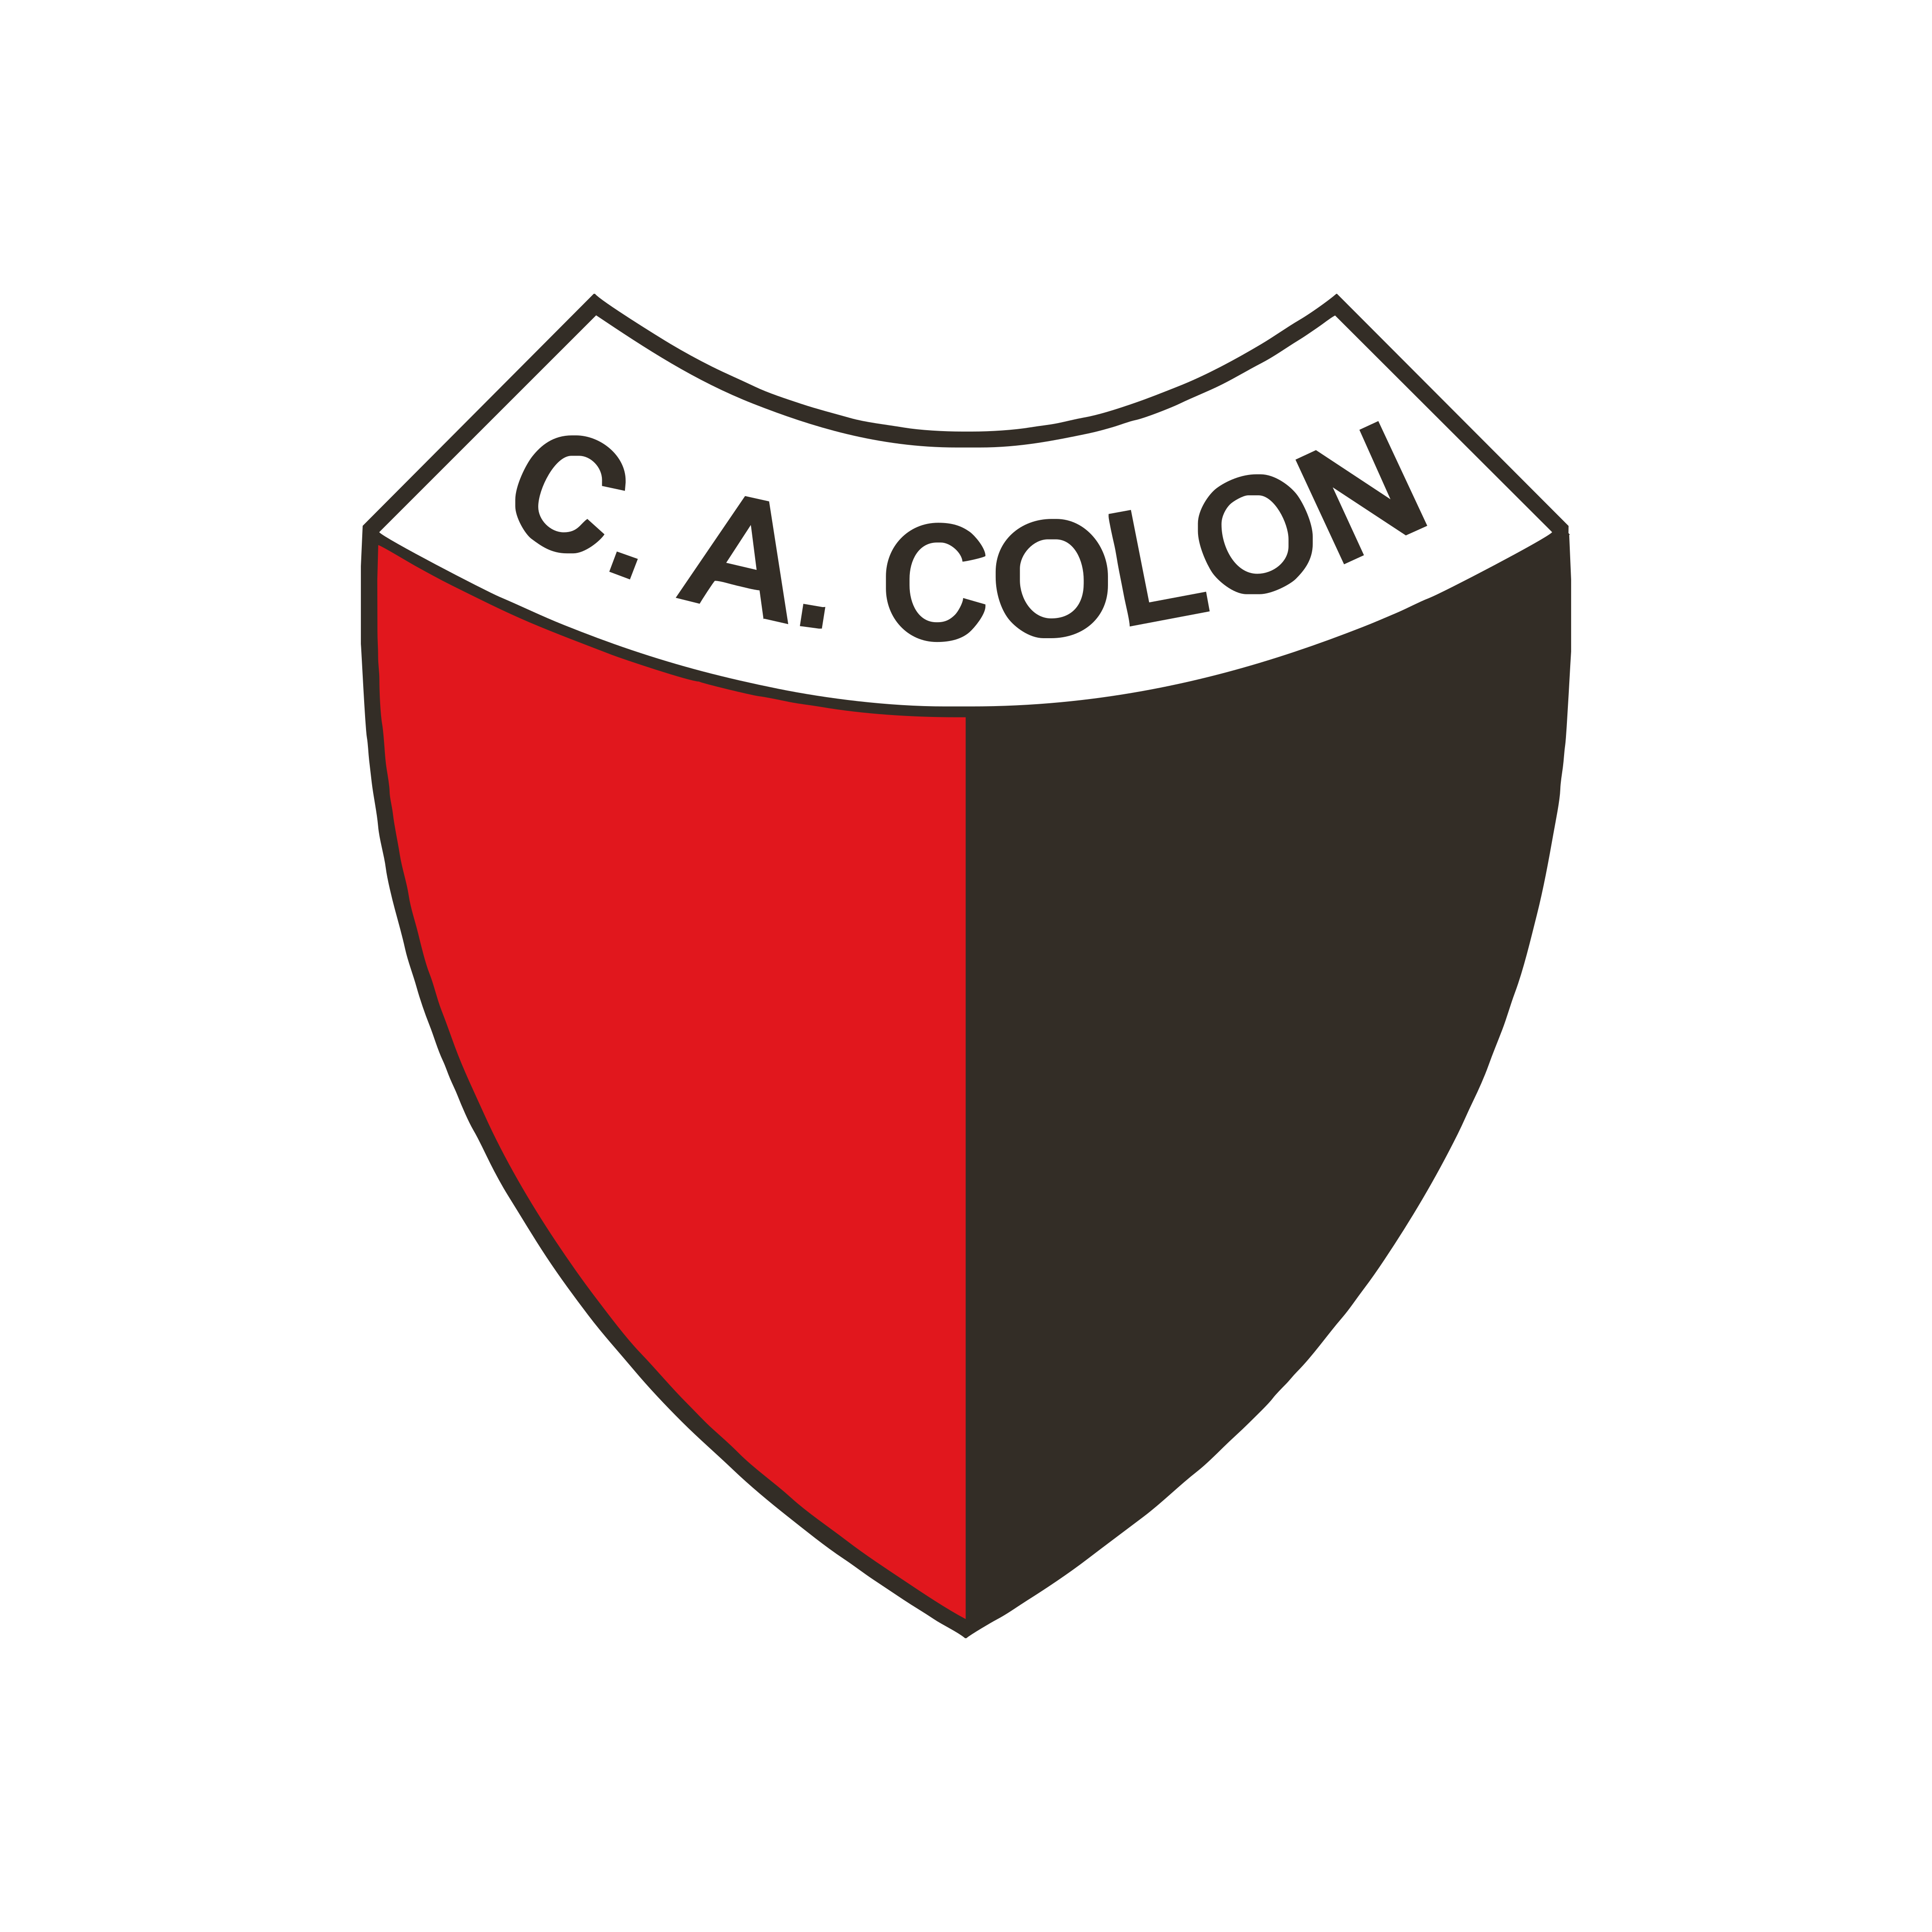 c a colon logo 0 - Club Atlético Colón Logo